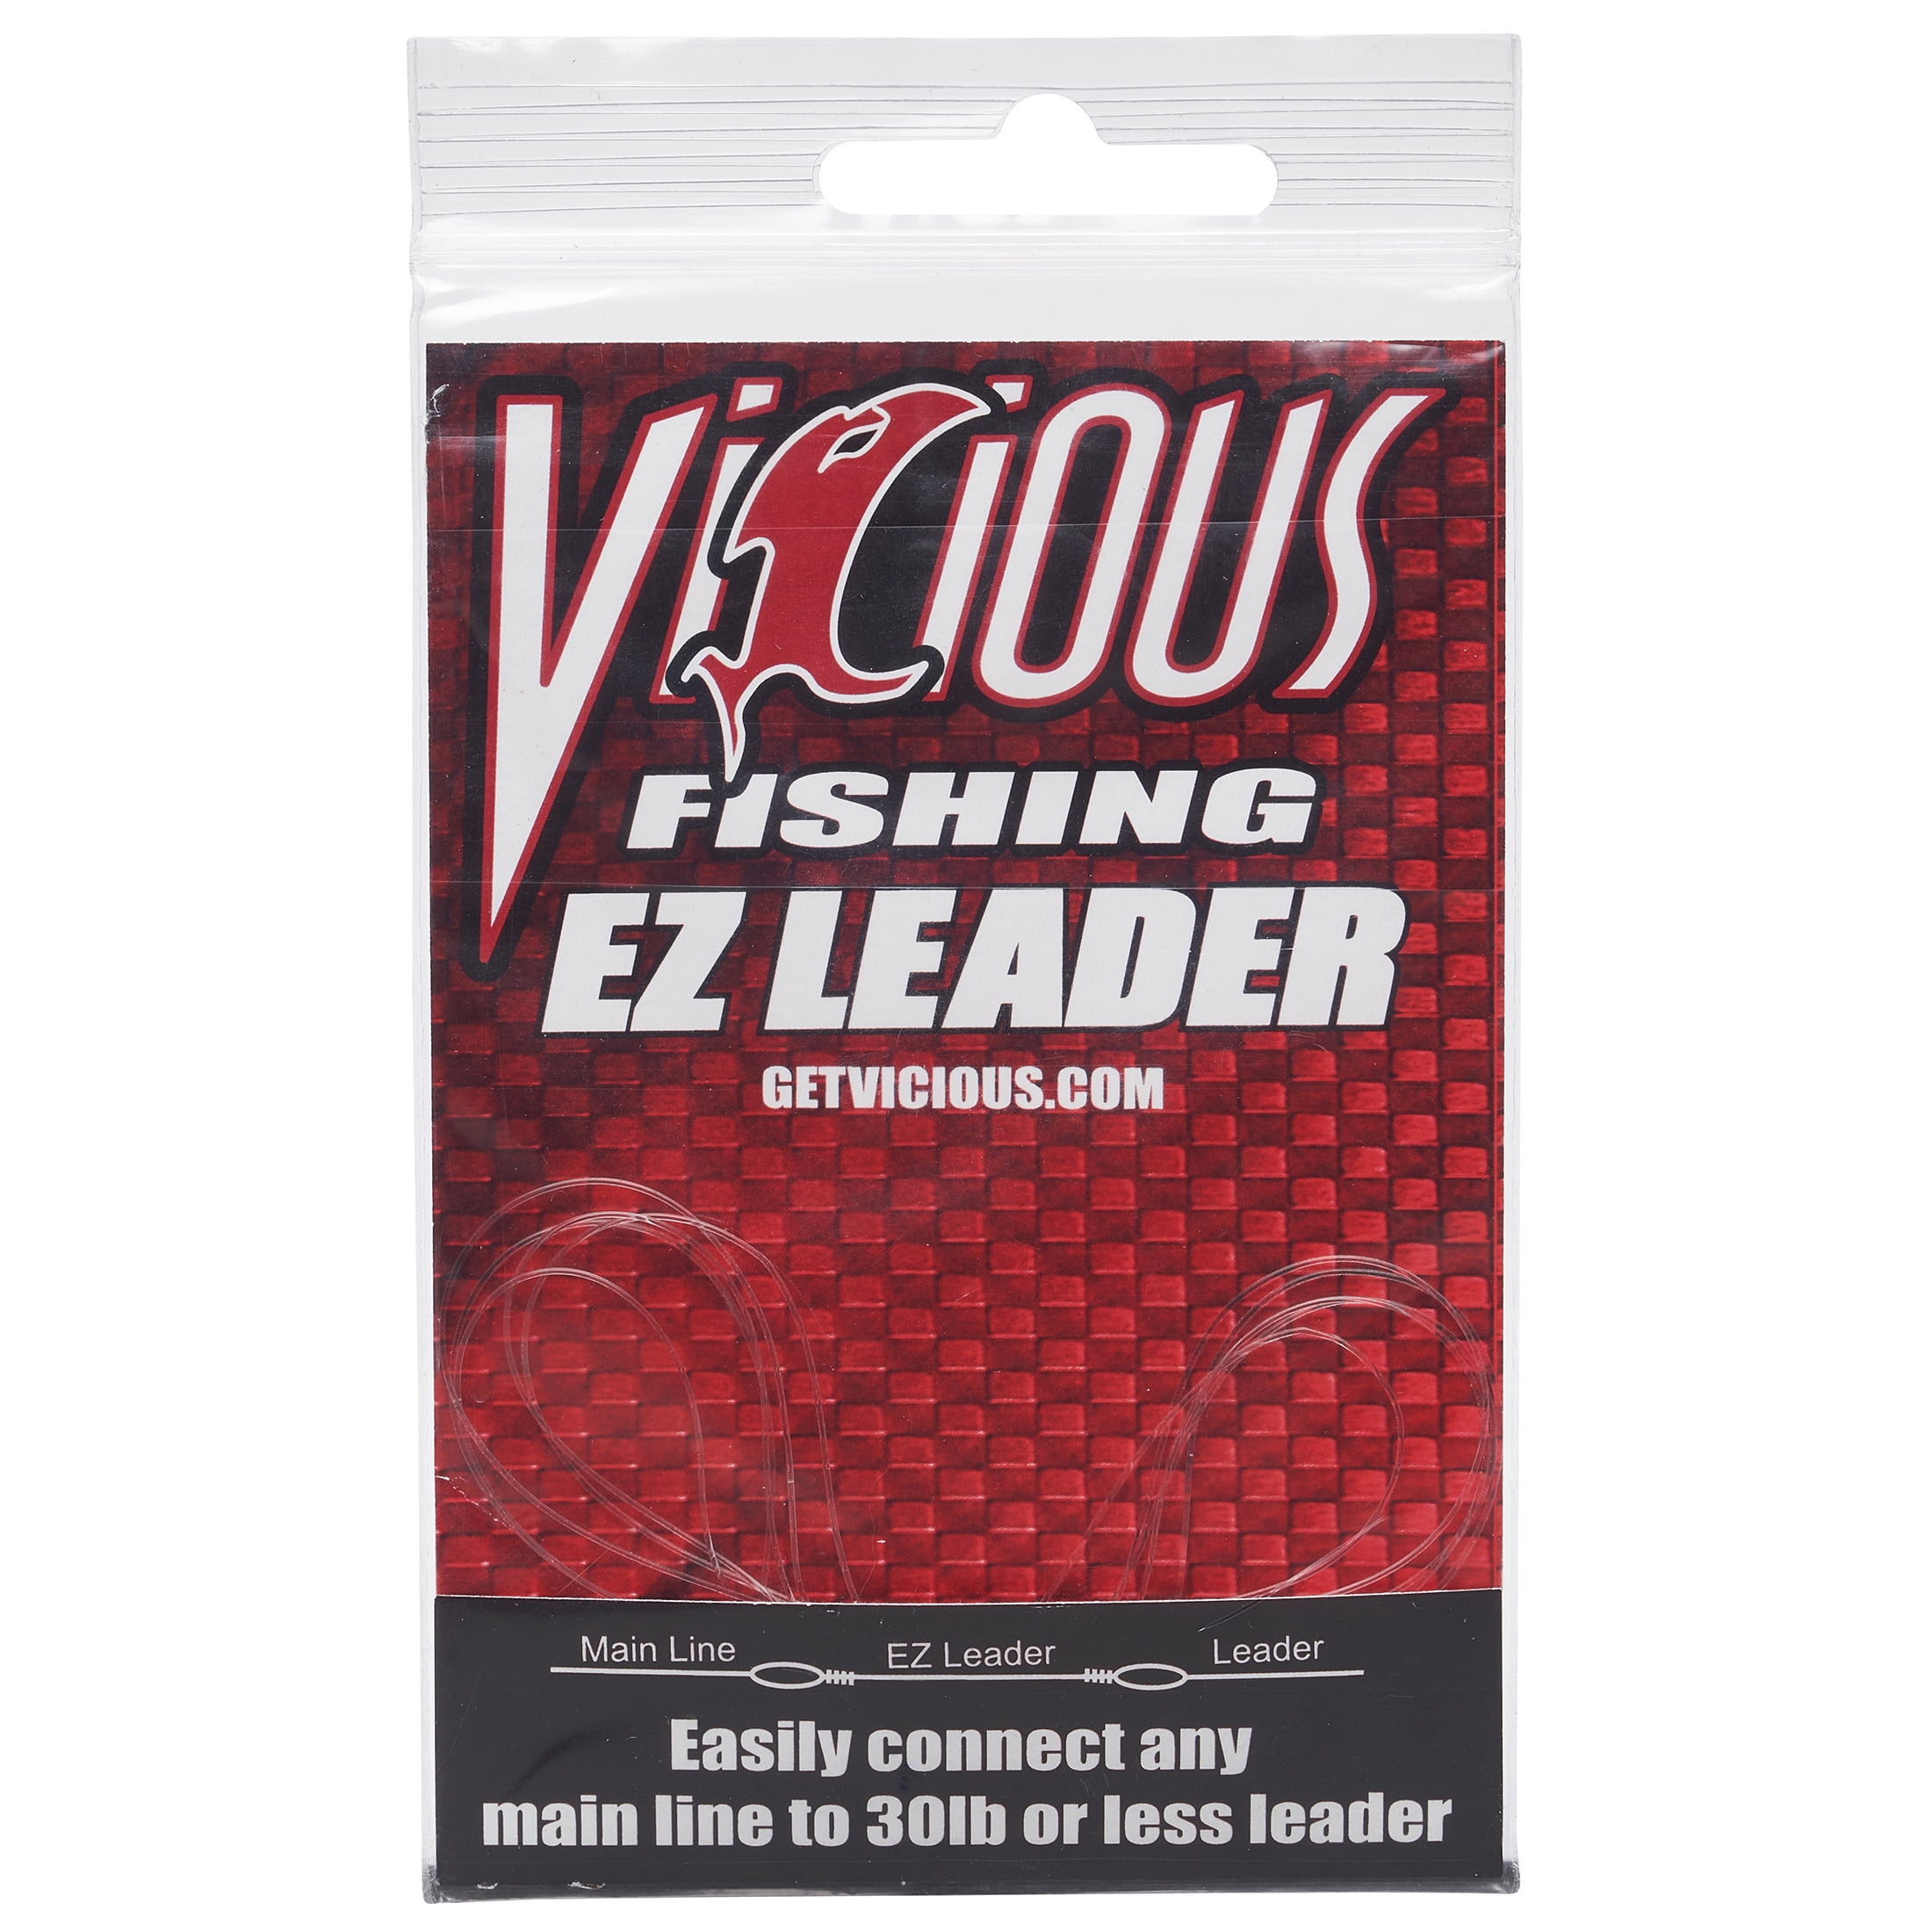 Vicious Fishing EZ Leader Fishing Leader Kit, 5 EZ Leader